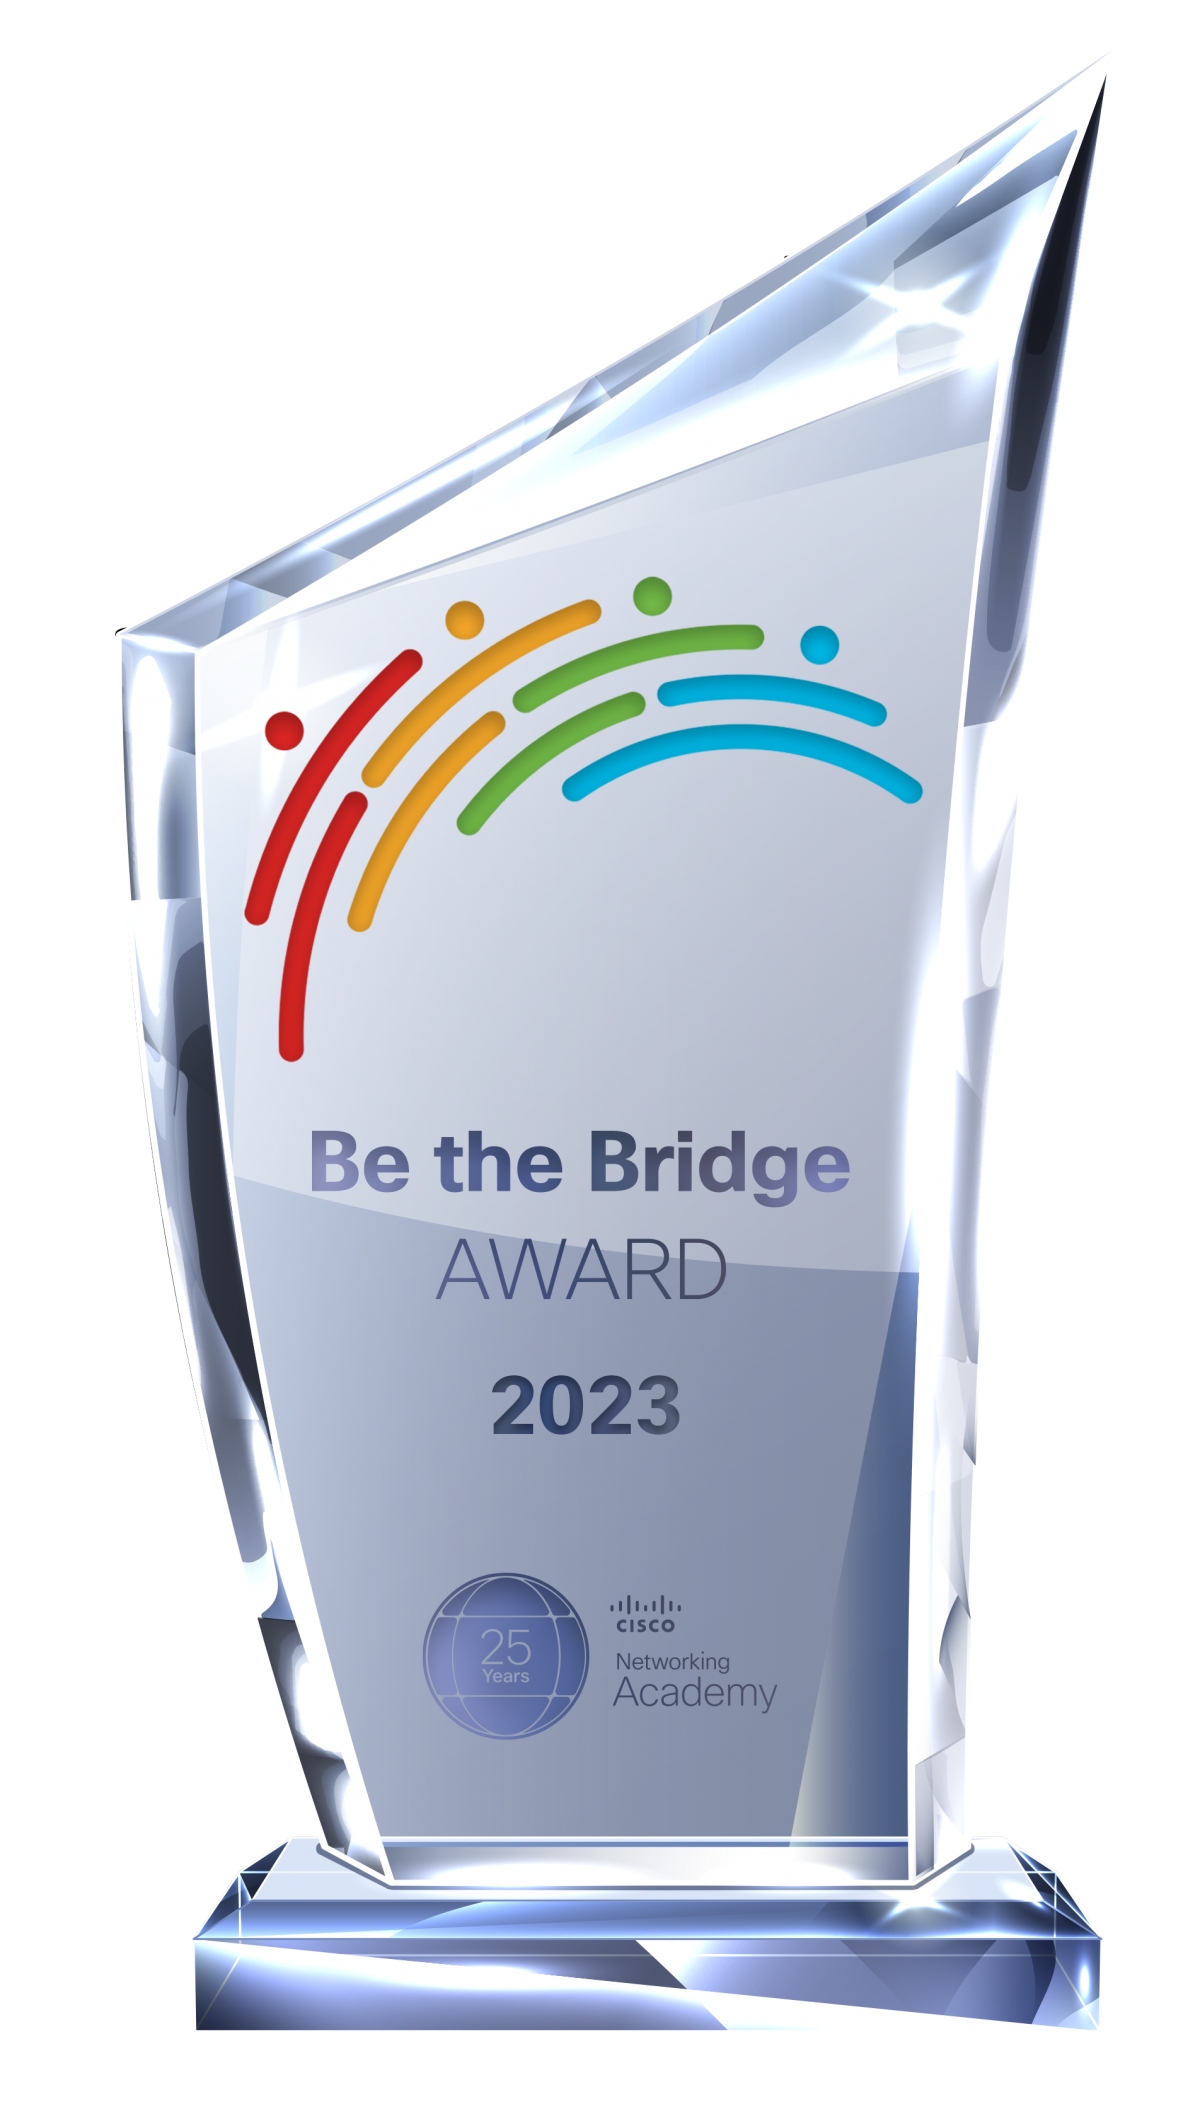 cisco networking academy tang giai thuong be the bridge award in 2023 cho bkacad hinh anh 2